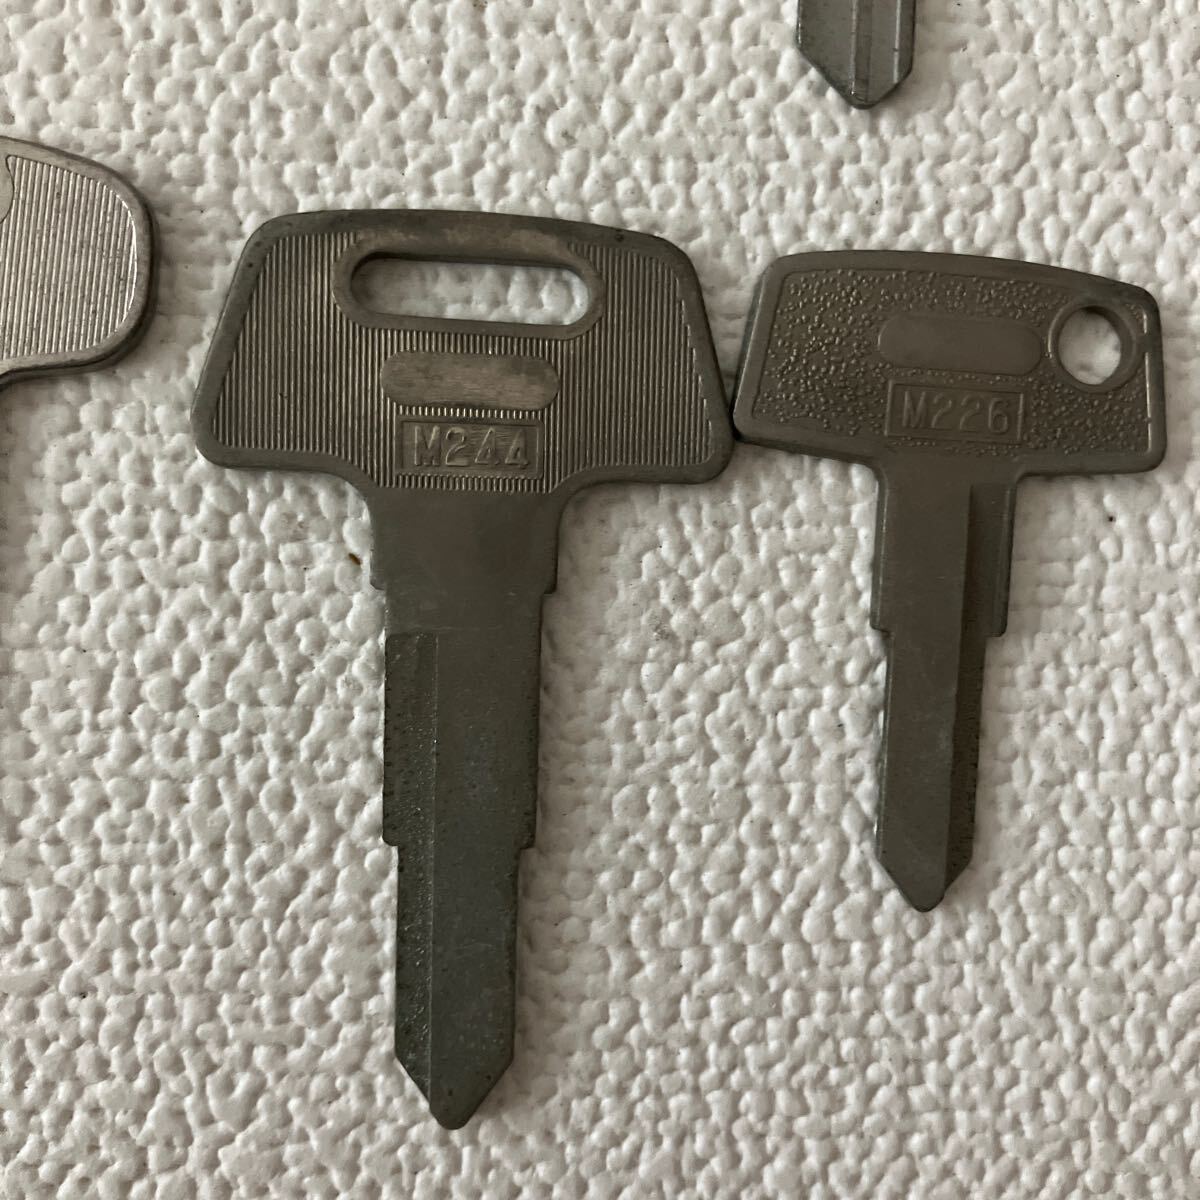 c306-10 60 未使用品 鍵 カギ まとめて 大量セット 合鍵 ブランクキー 加工 材料 カット 持込み コピーキー クローバー H番 M番 FUKI H230